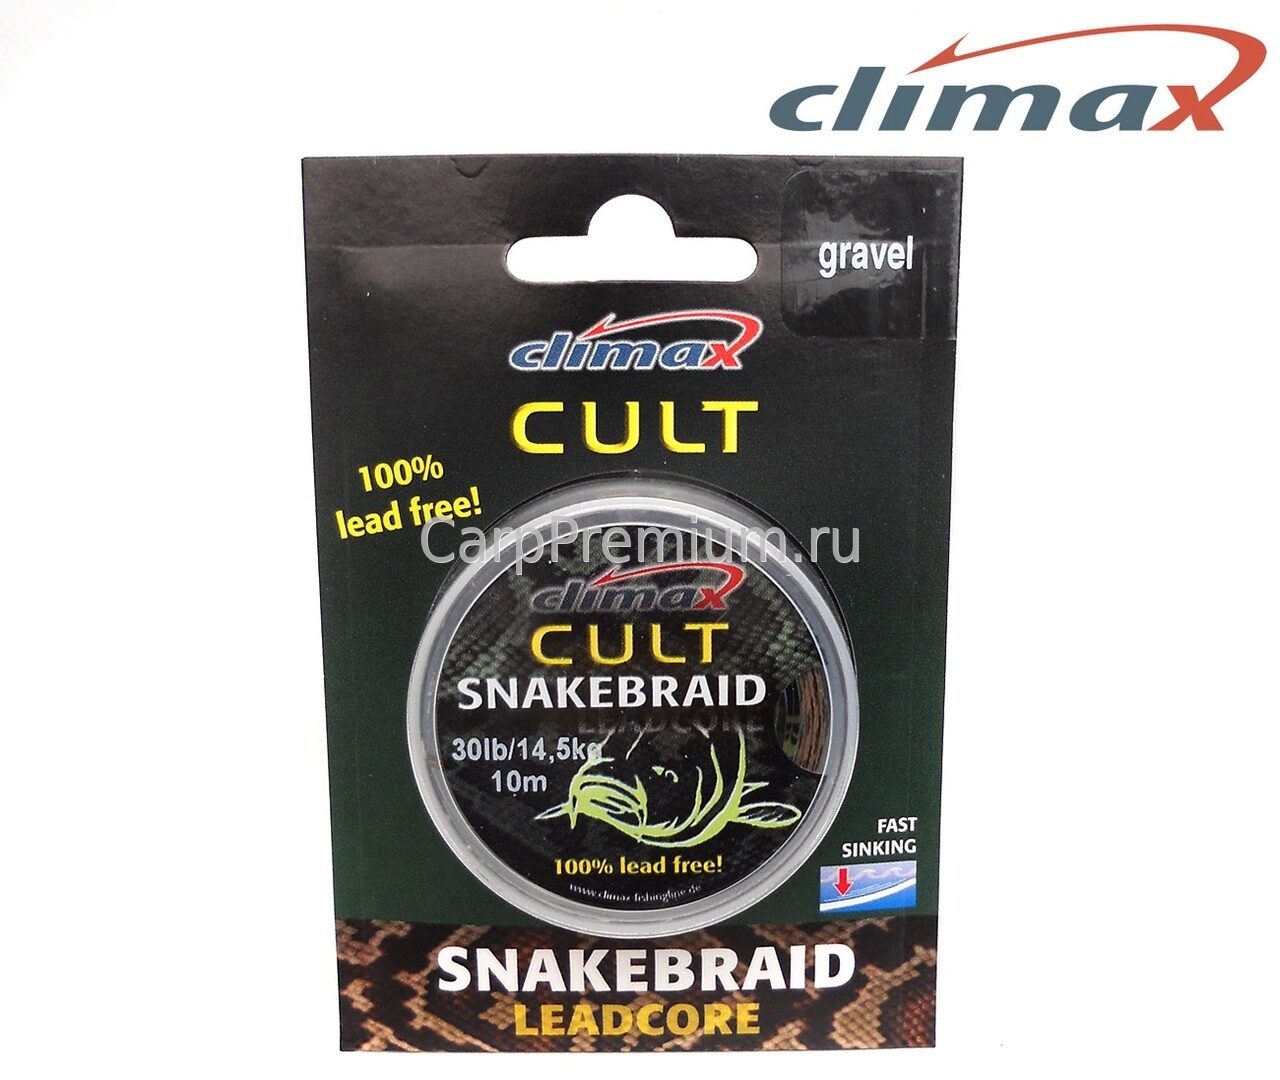 Лидкор без свинцового сердечника Коричневый Сlimax (Клаймакс) - CULT SnakeBraid Gravel 14.5 кг / 30 lb, 10 м